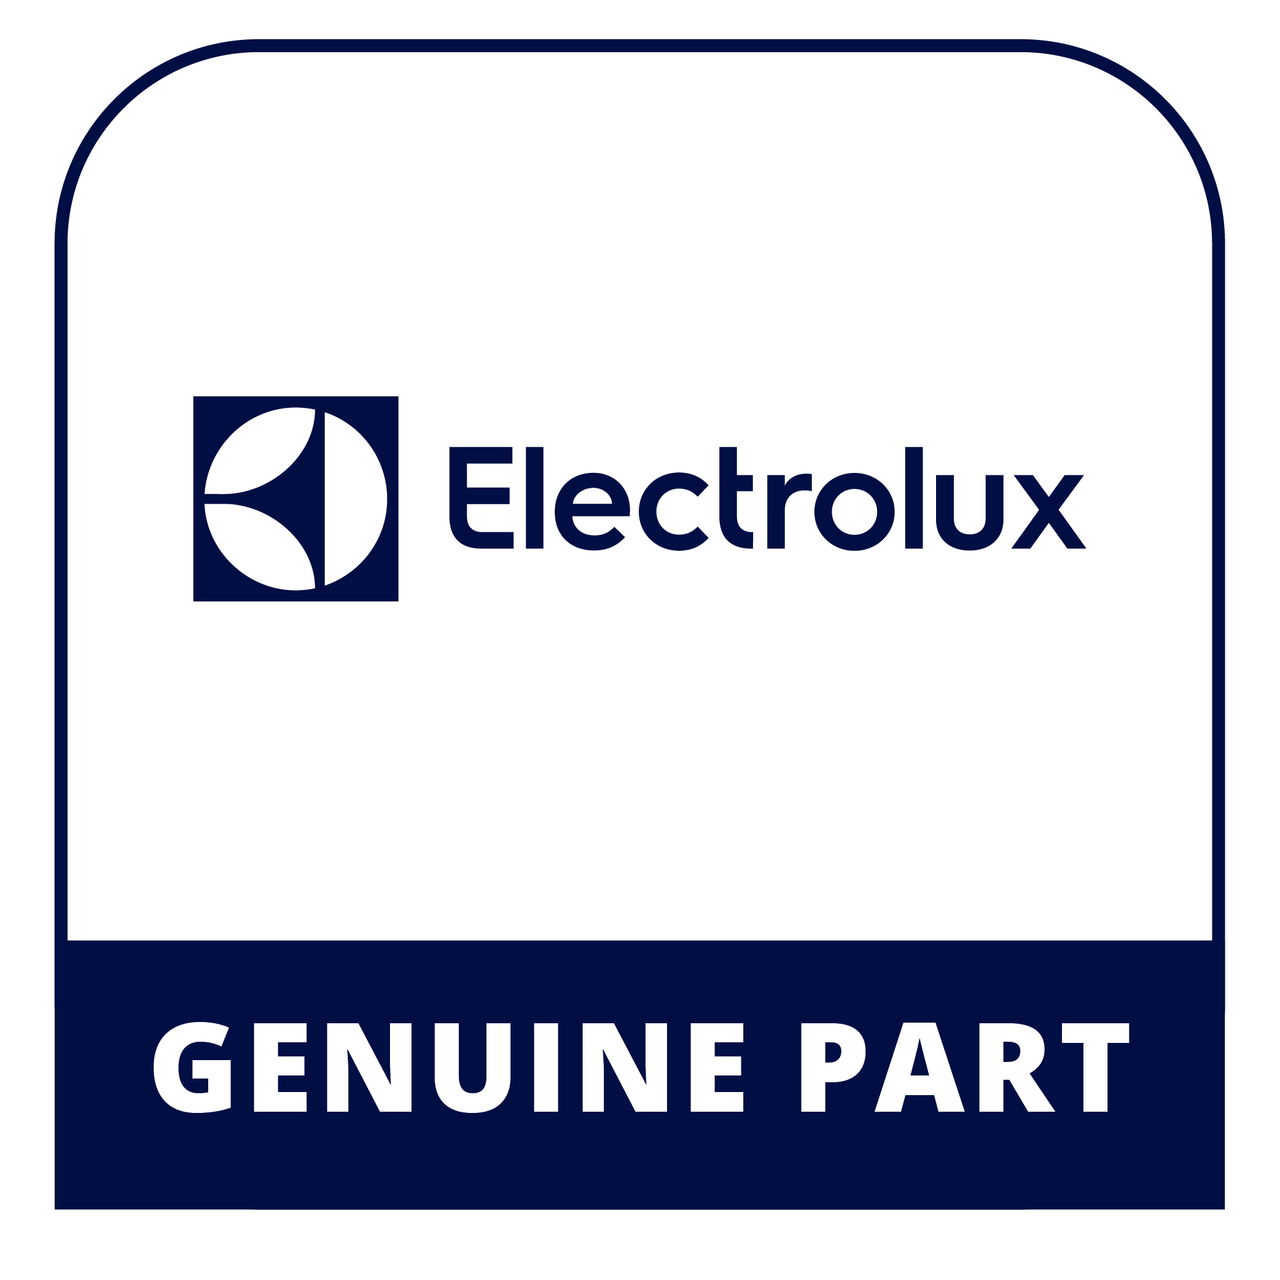 Frigidaire - Electrolux 316259206 Instructions - Genuine Electrolux Part